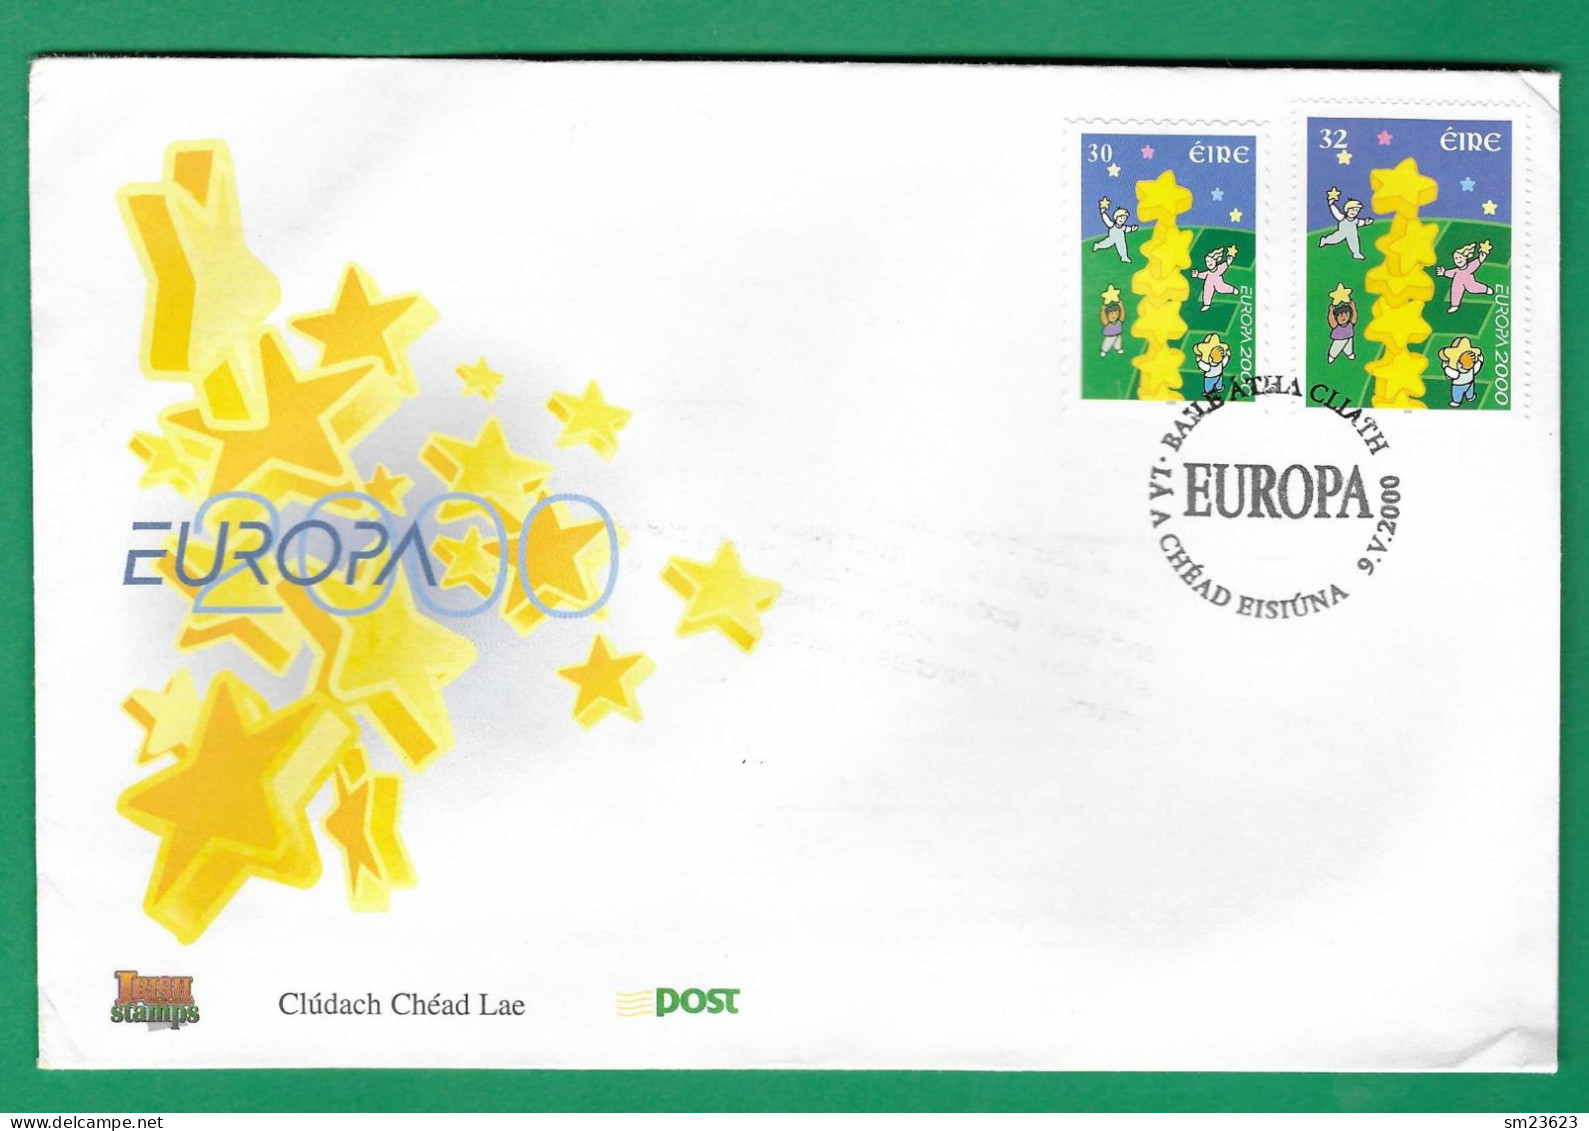 Irland / Éire  2000  Mi.Nr.1223 / 24 , EUROPA CEPT Kinder Bauen Sternenturm - FDC Chéad Eisiúna 9.V.2000 - 2000